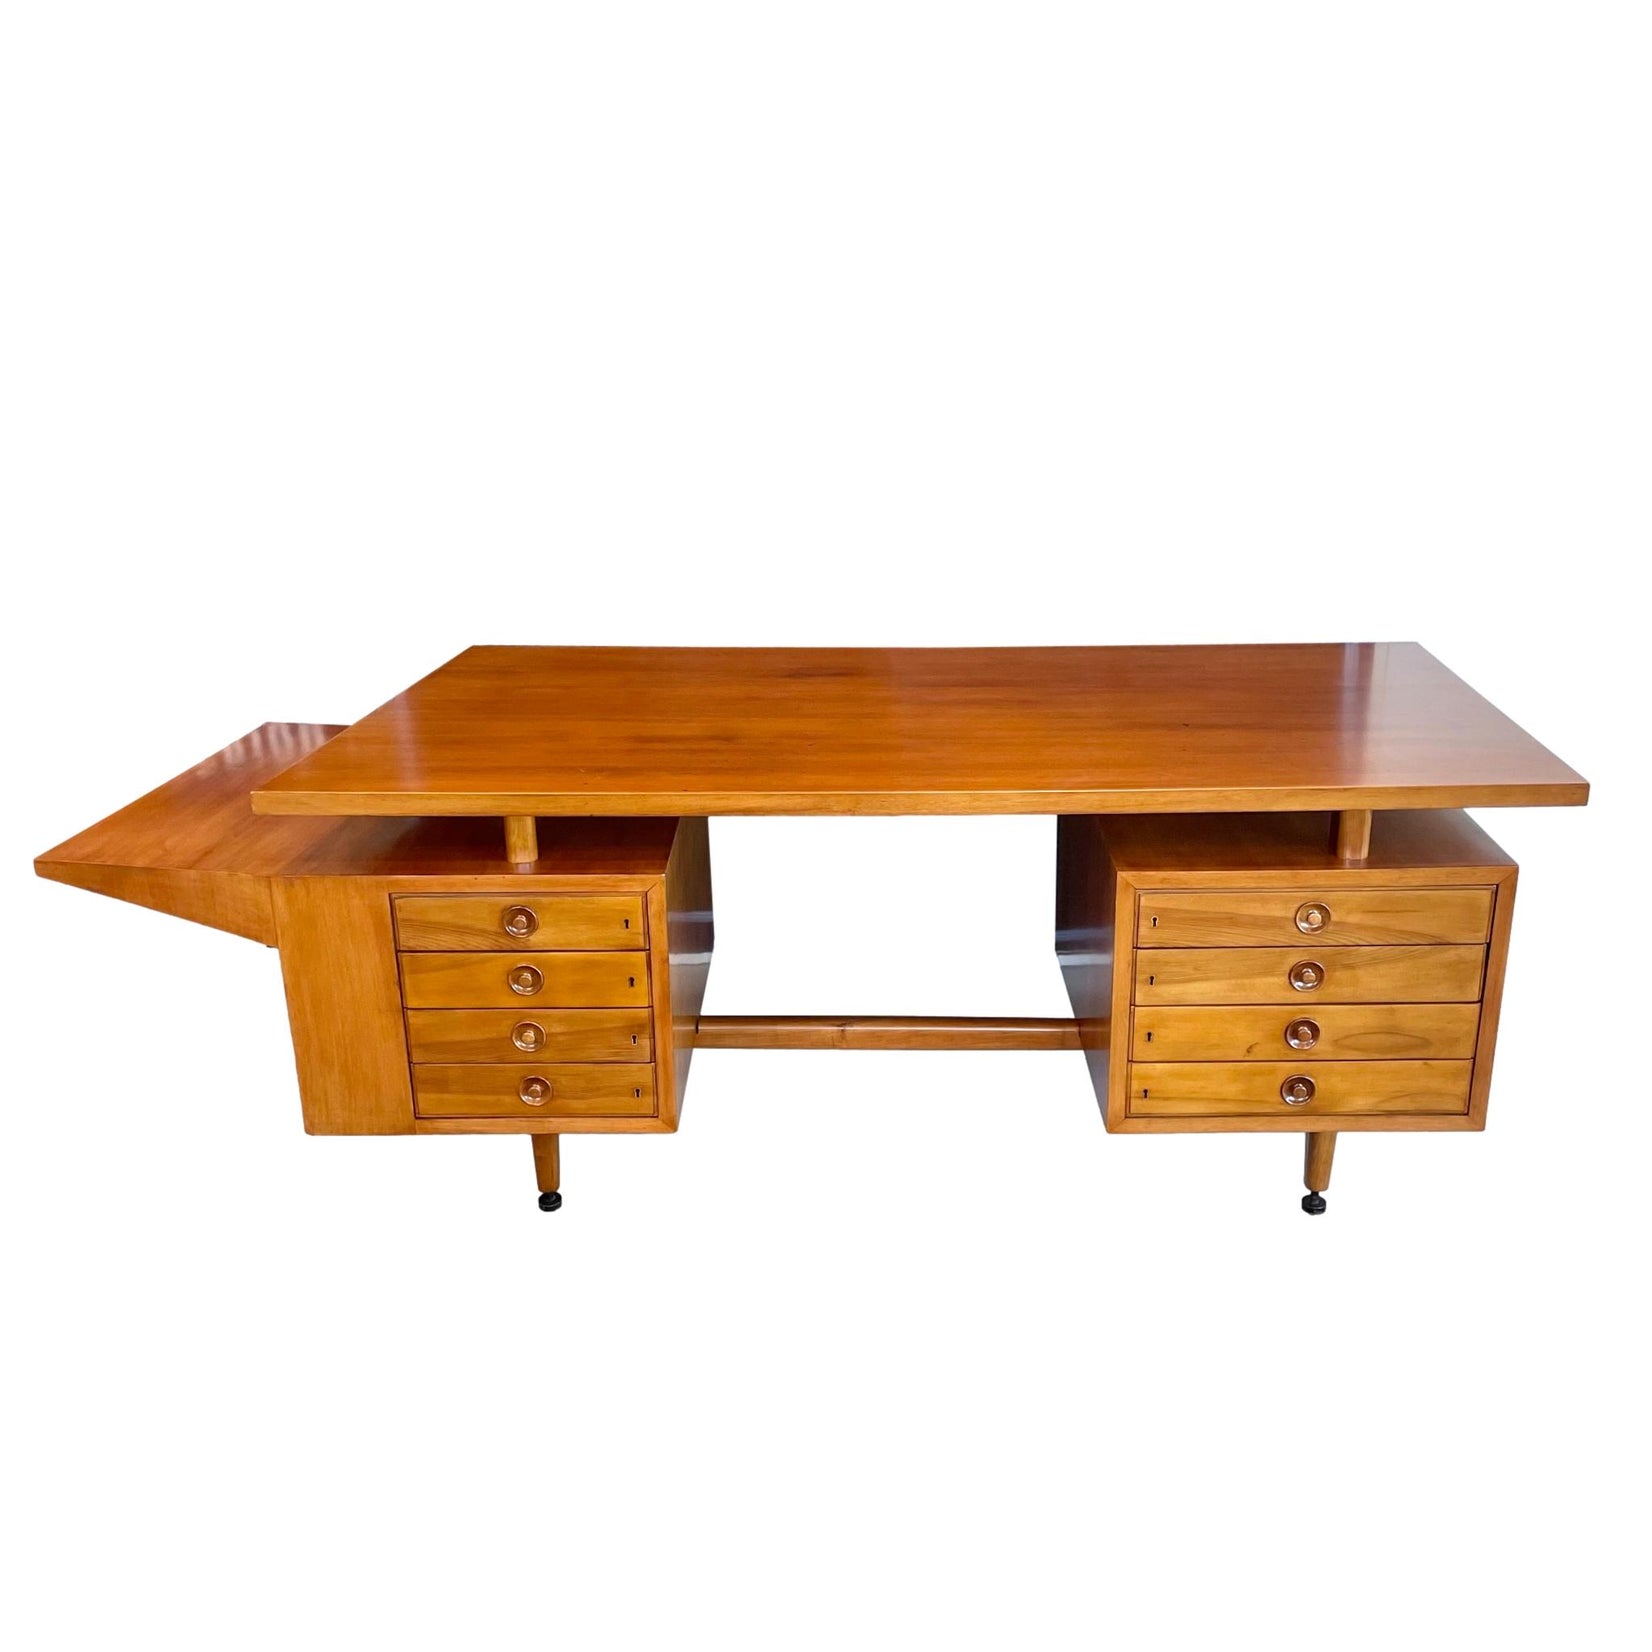 Melchiorre Bega Desk, 1950s Italy